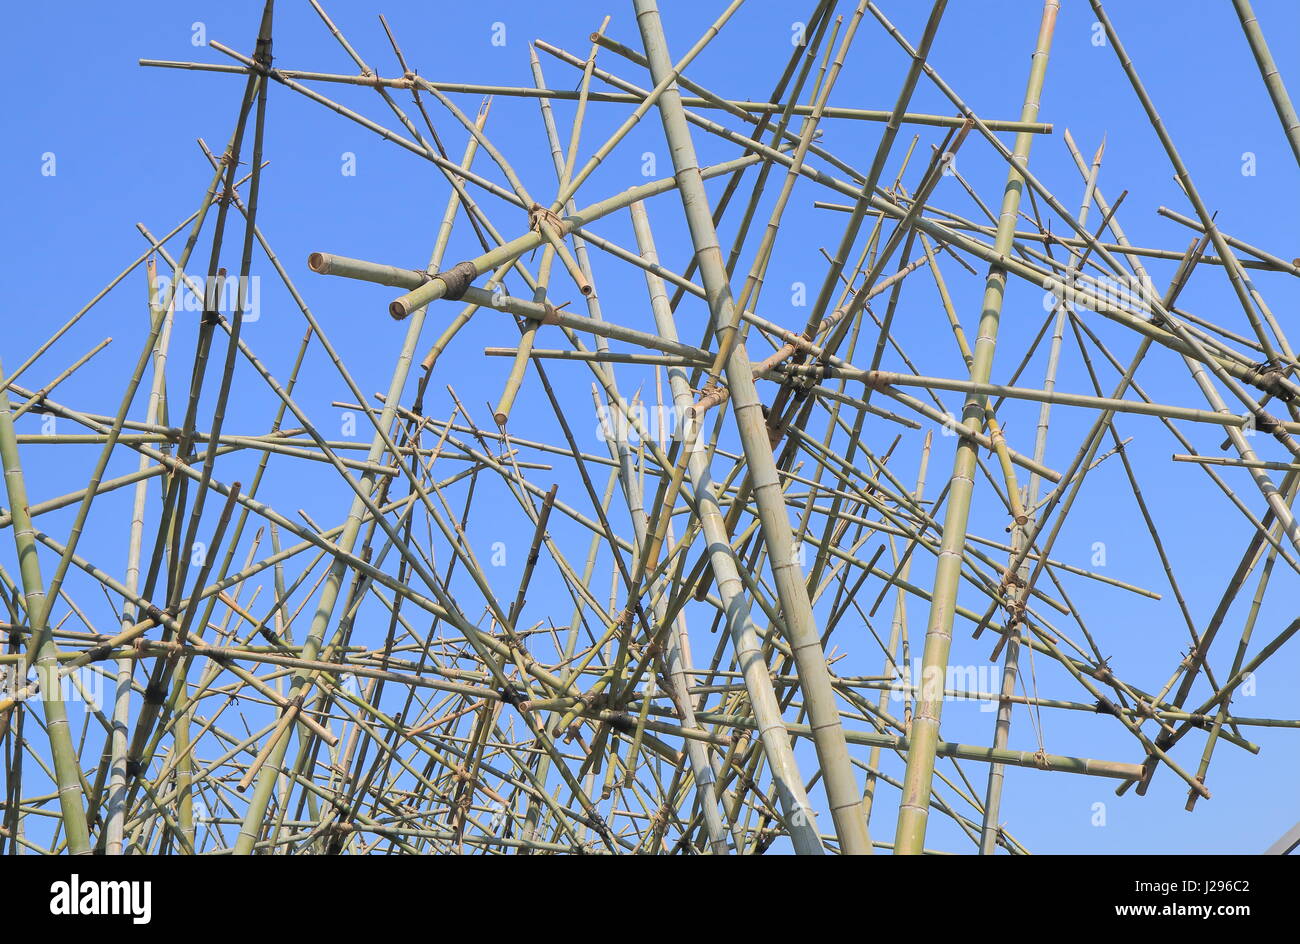 Bamboo scaffolding in blue sky Stock Photo